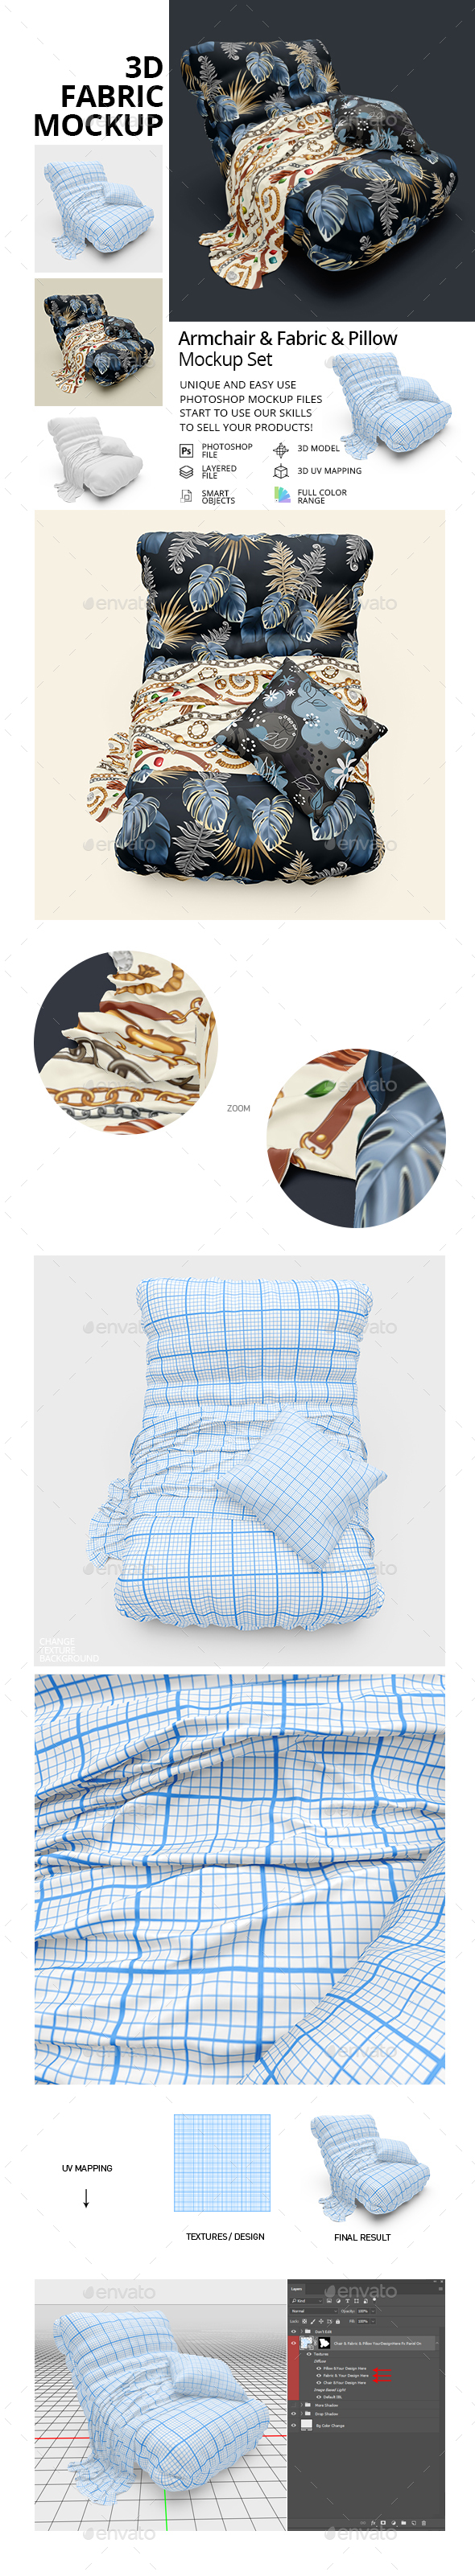 Armchair & Fabric & Pillow Mockup